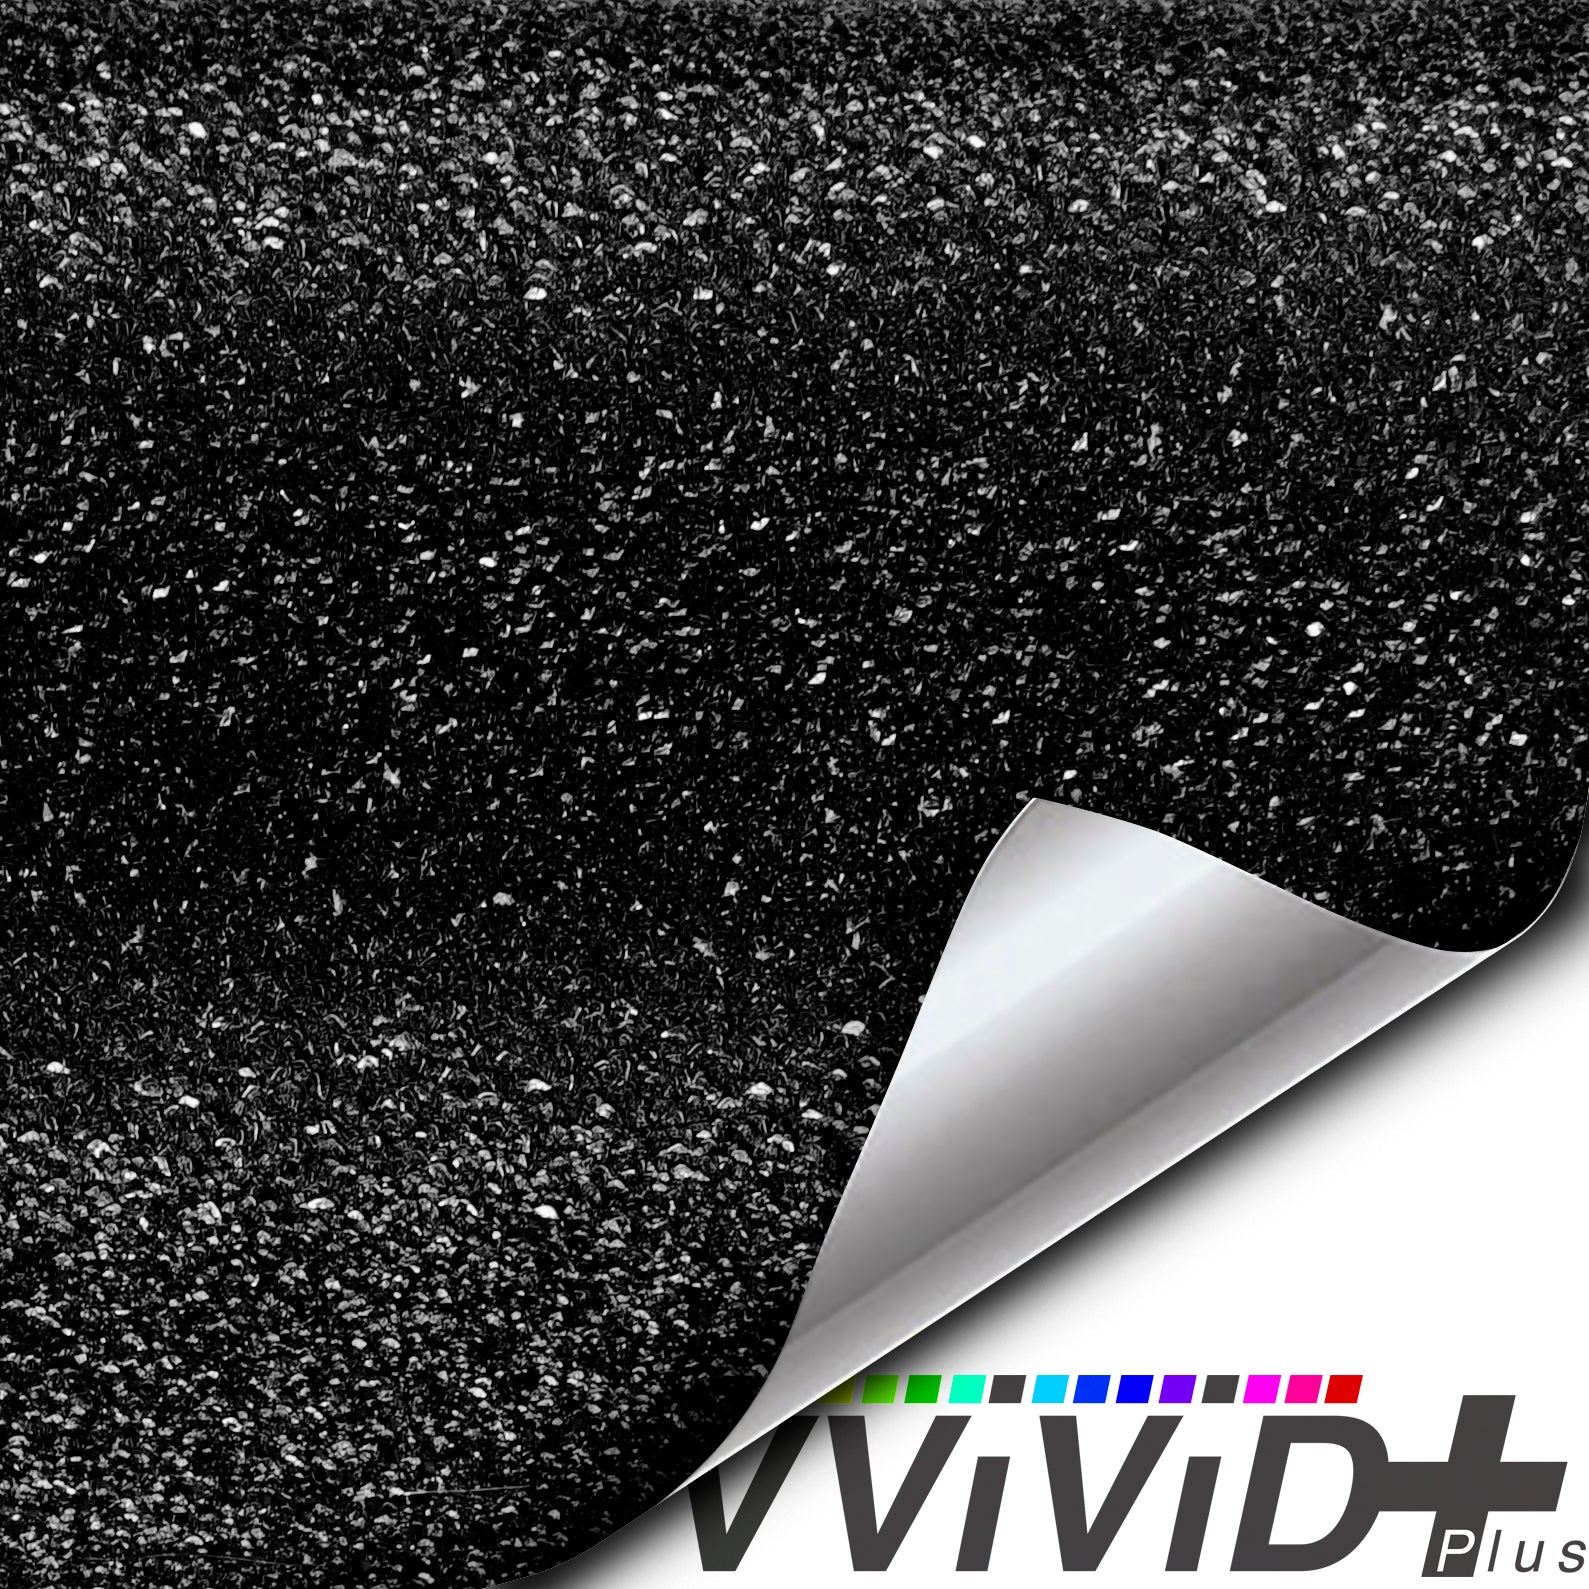 High quality Super Shiny Silver diamond car glitter Car Wrap Vinyl